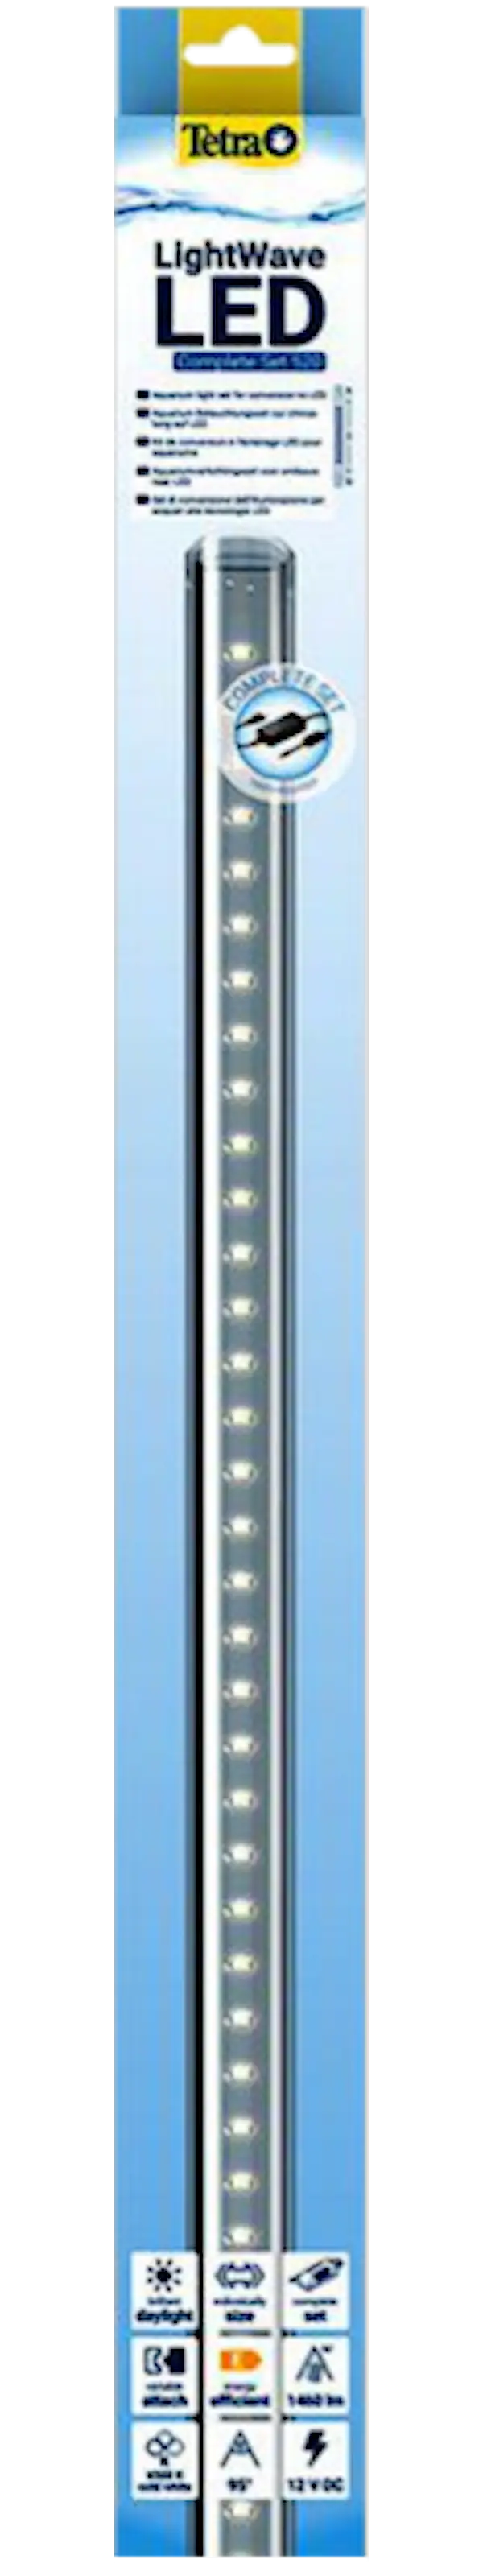 LightWave LED-enkeltlys, 990 - 1070 mm